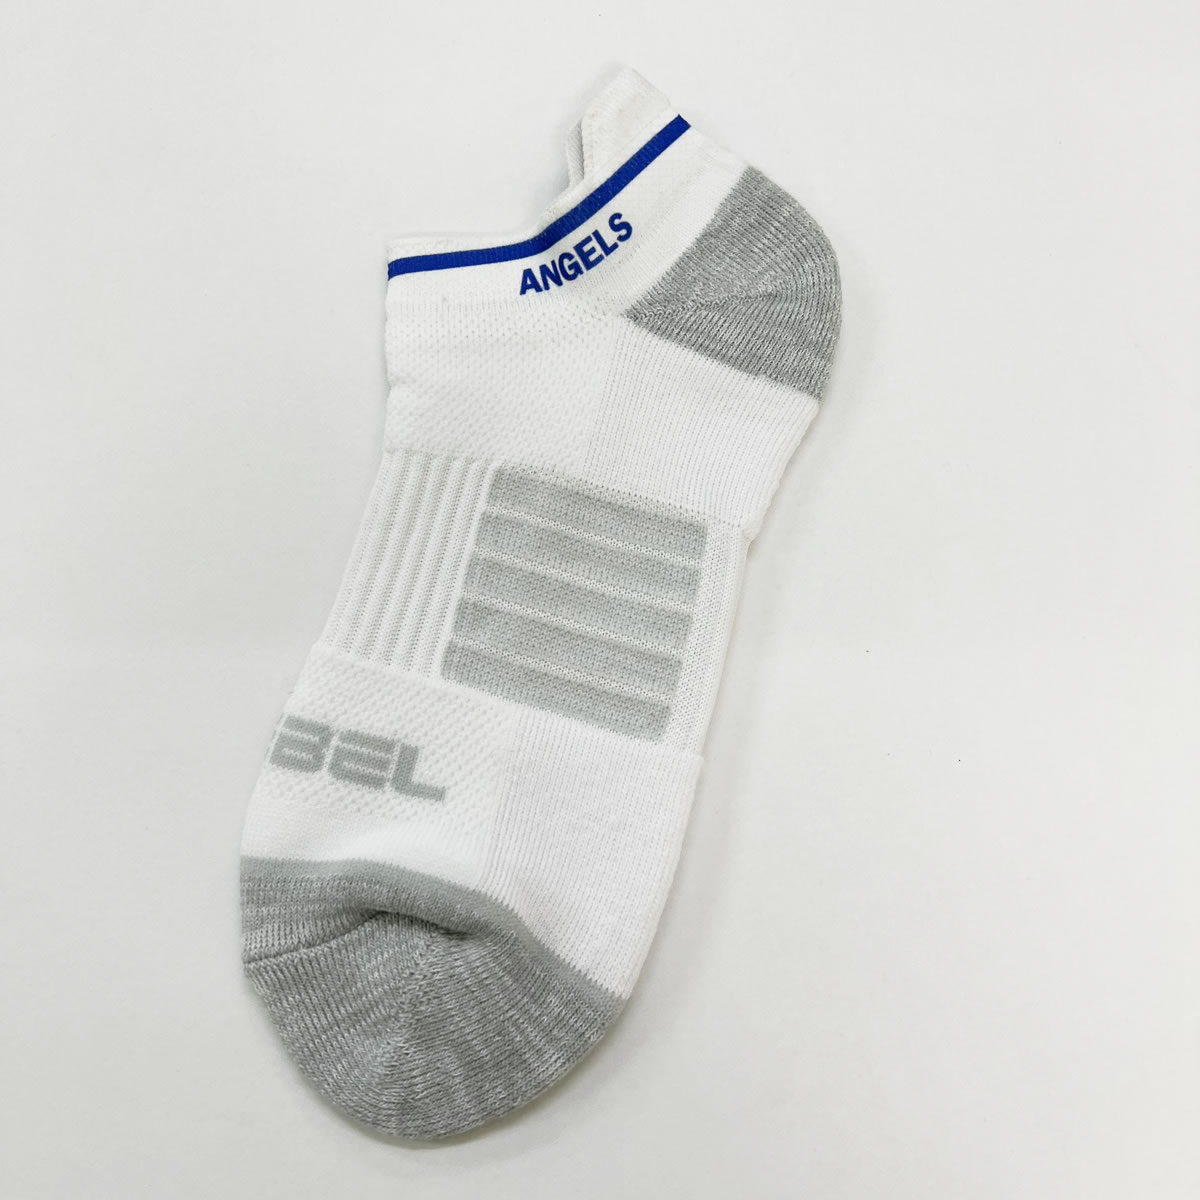 Sublimated Ankle Socks